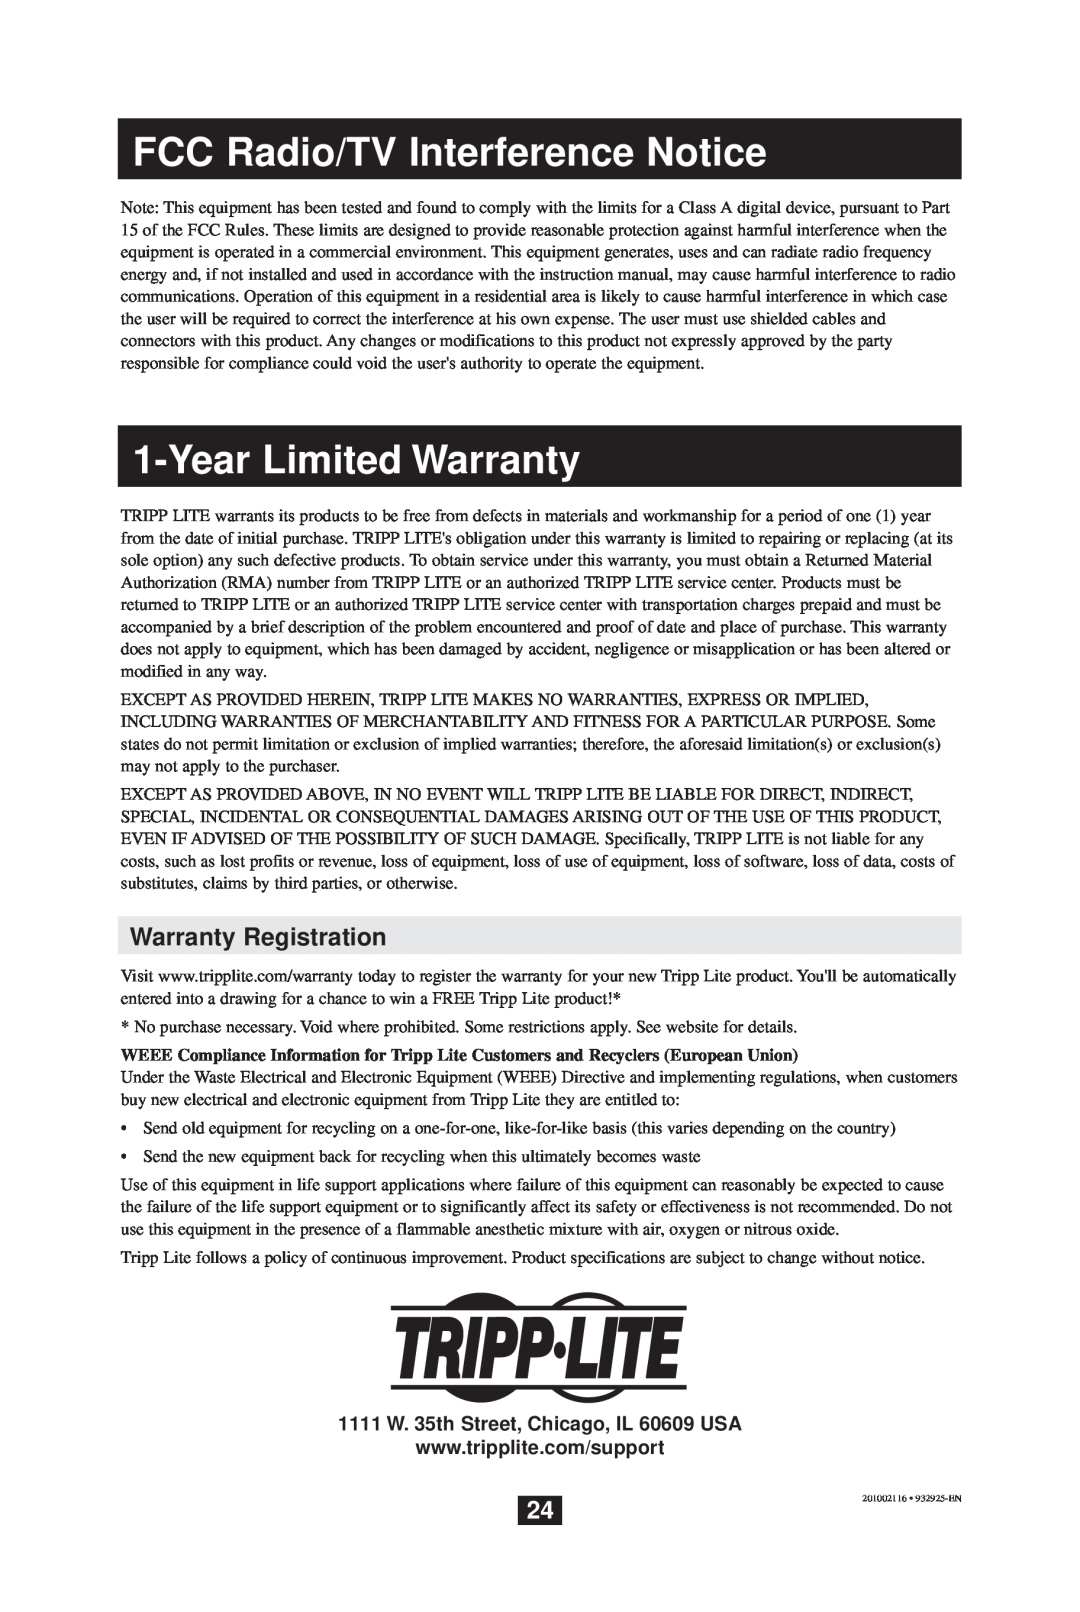 Tripp Lite B070-008-19 owner manual FCC Radio/TV Interference Notice, Year Limited Warranty, Warranty Registration 